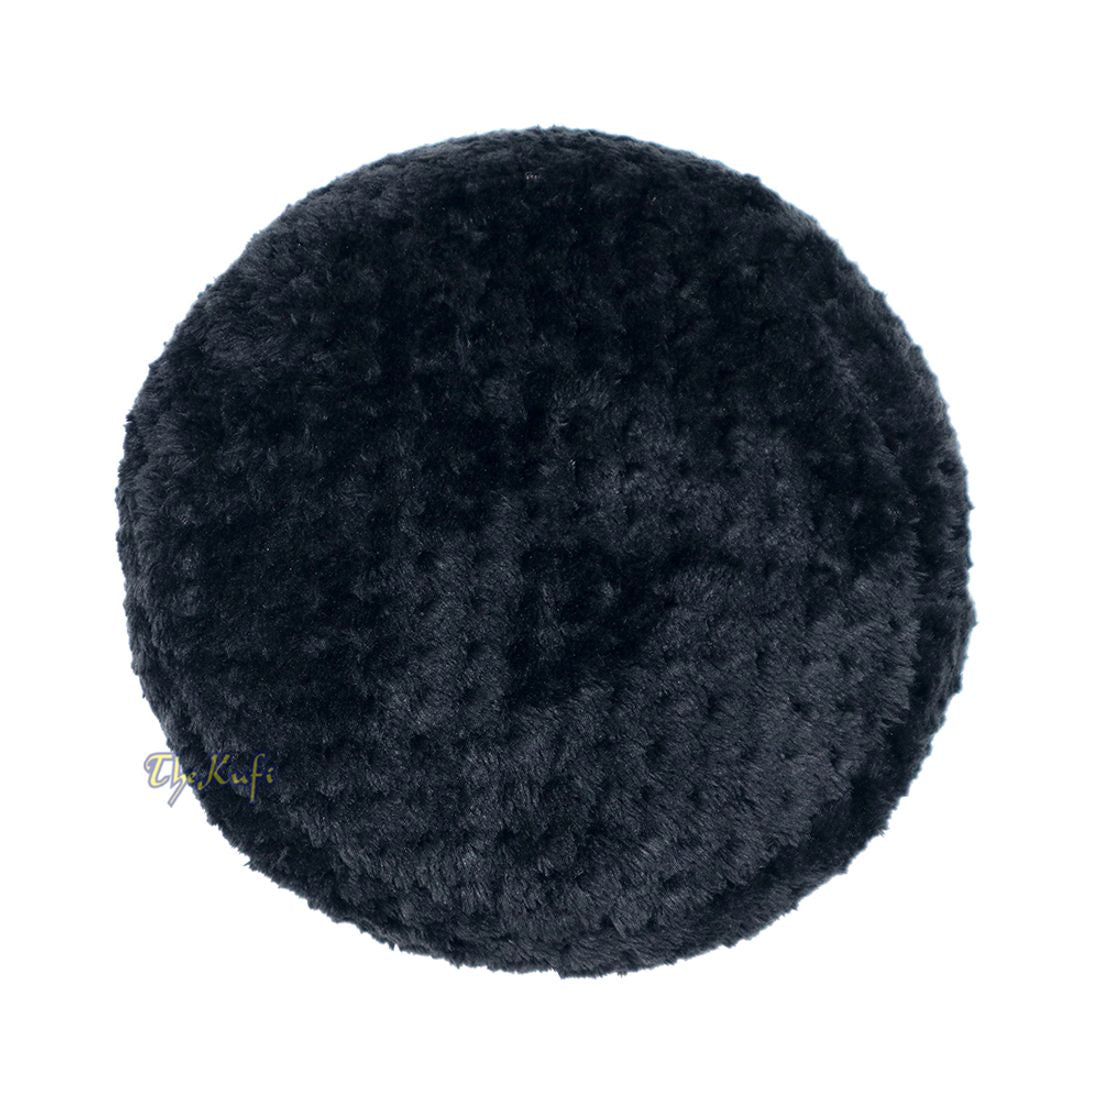 Black Winter Kufi Faux Fur Warm Chechen Uzbeki Style Islamic Hat Plush One-size Medium-large Stretchy 4-inch Tall Head Cover Muslim